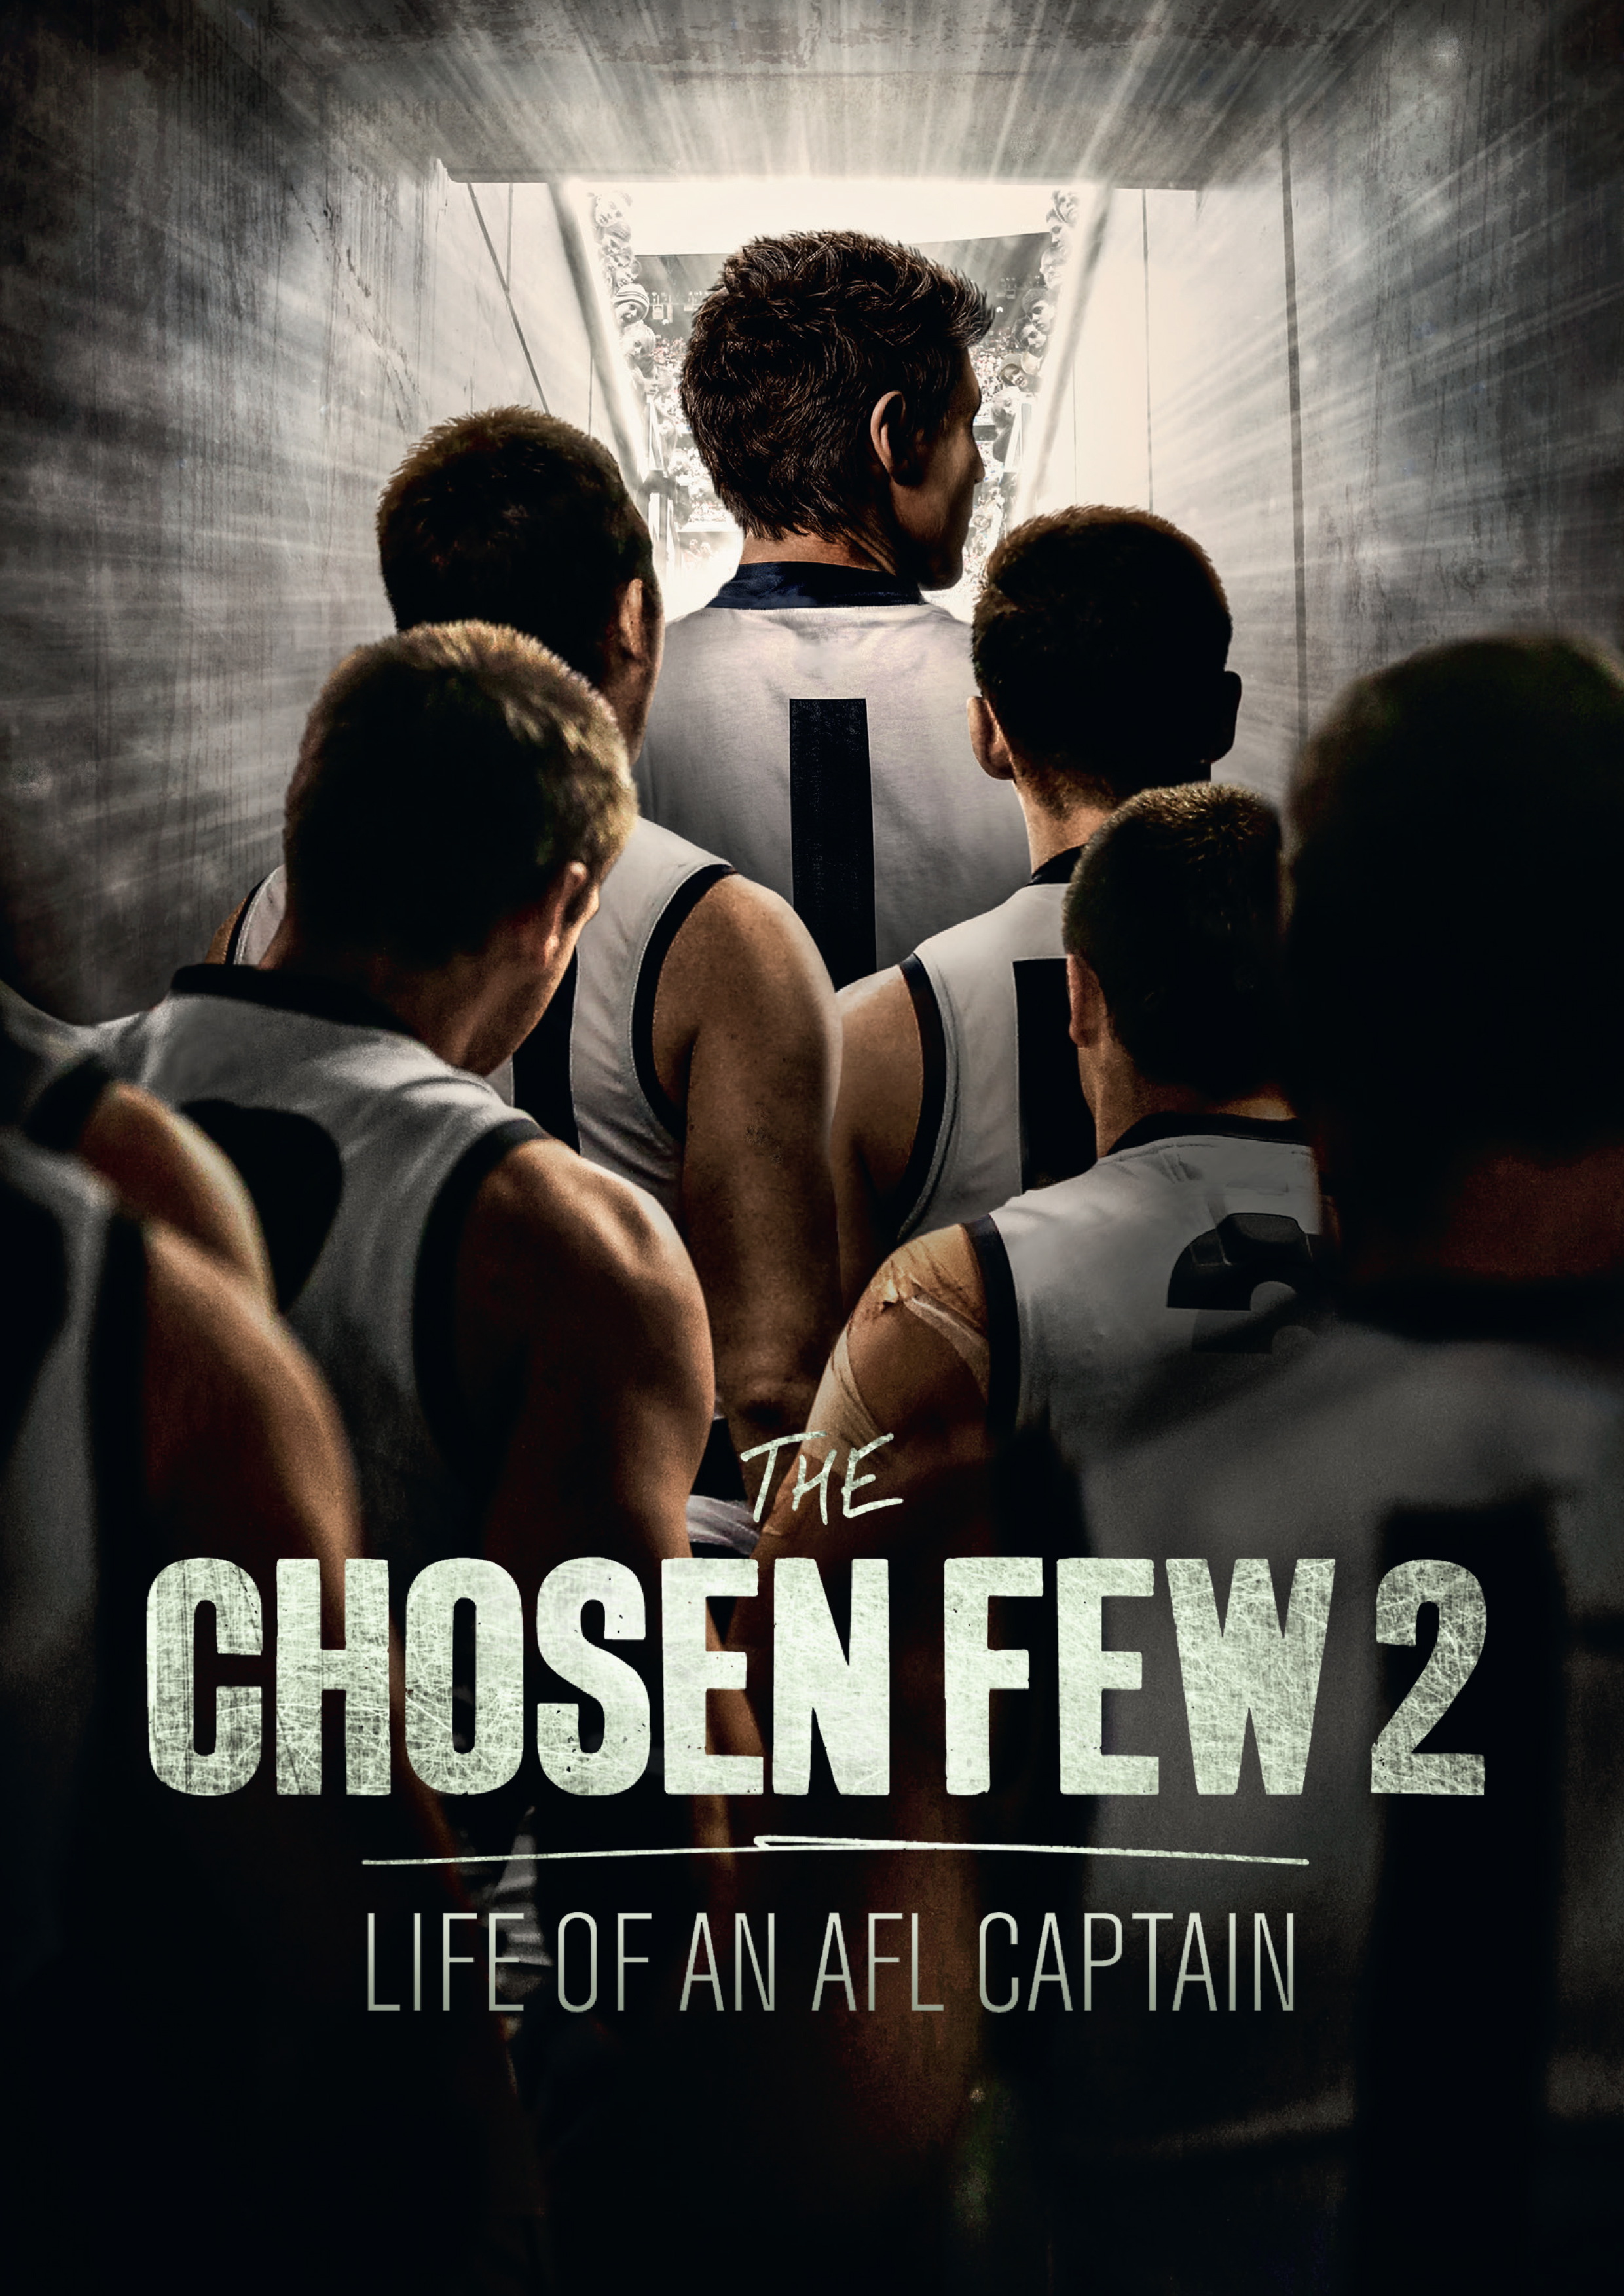 THE CHOSEN FEW 2 (LIFE OF AN AFL CAPTAIN)